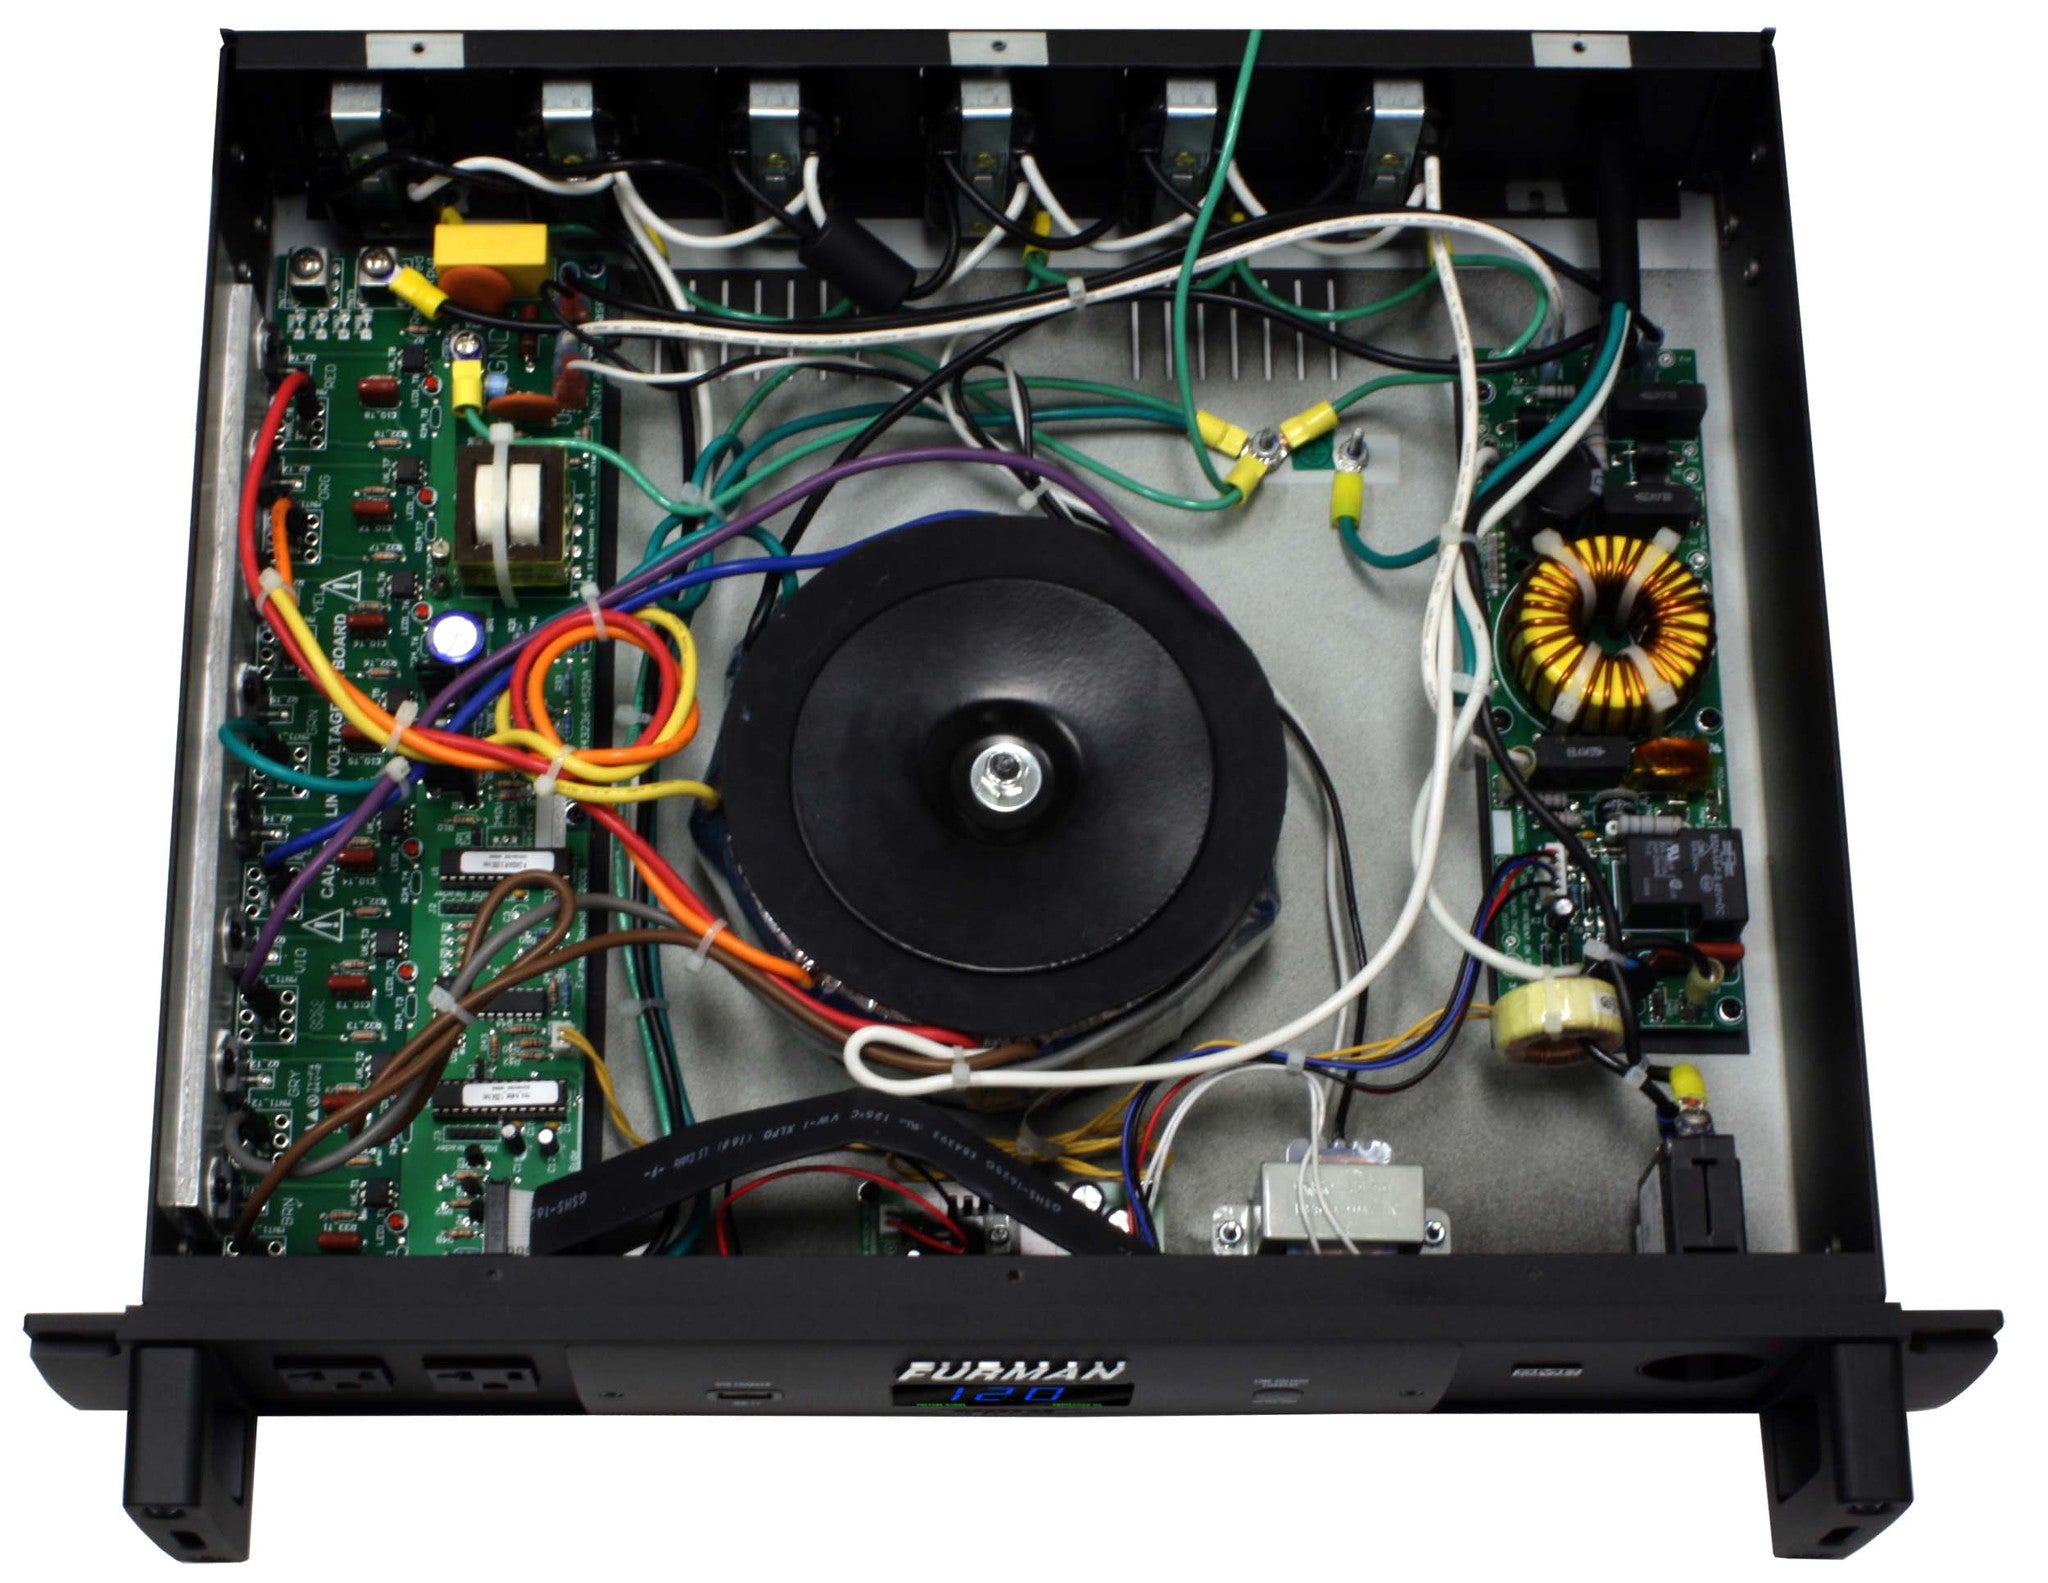 Accessories - Furman - Furman Sound P-2400 AR - Professional Audio Design, Inc